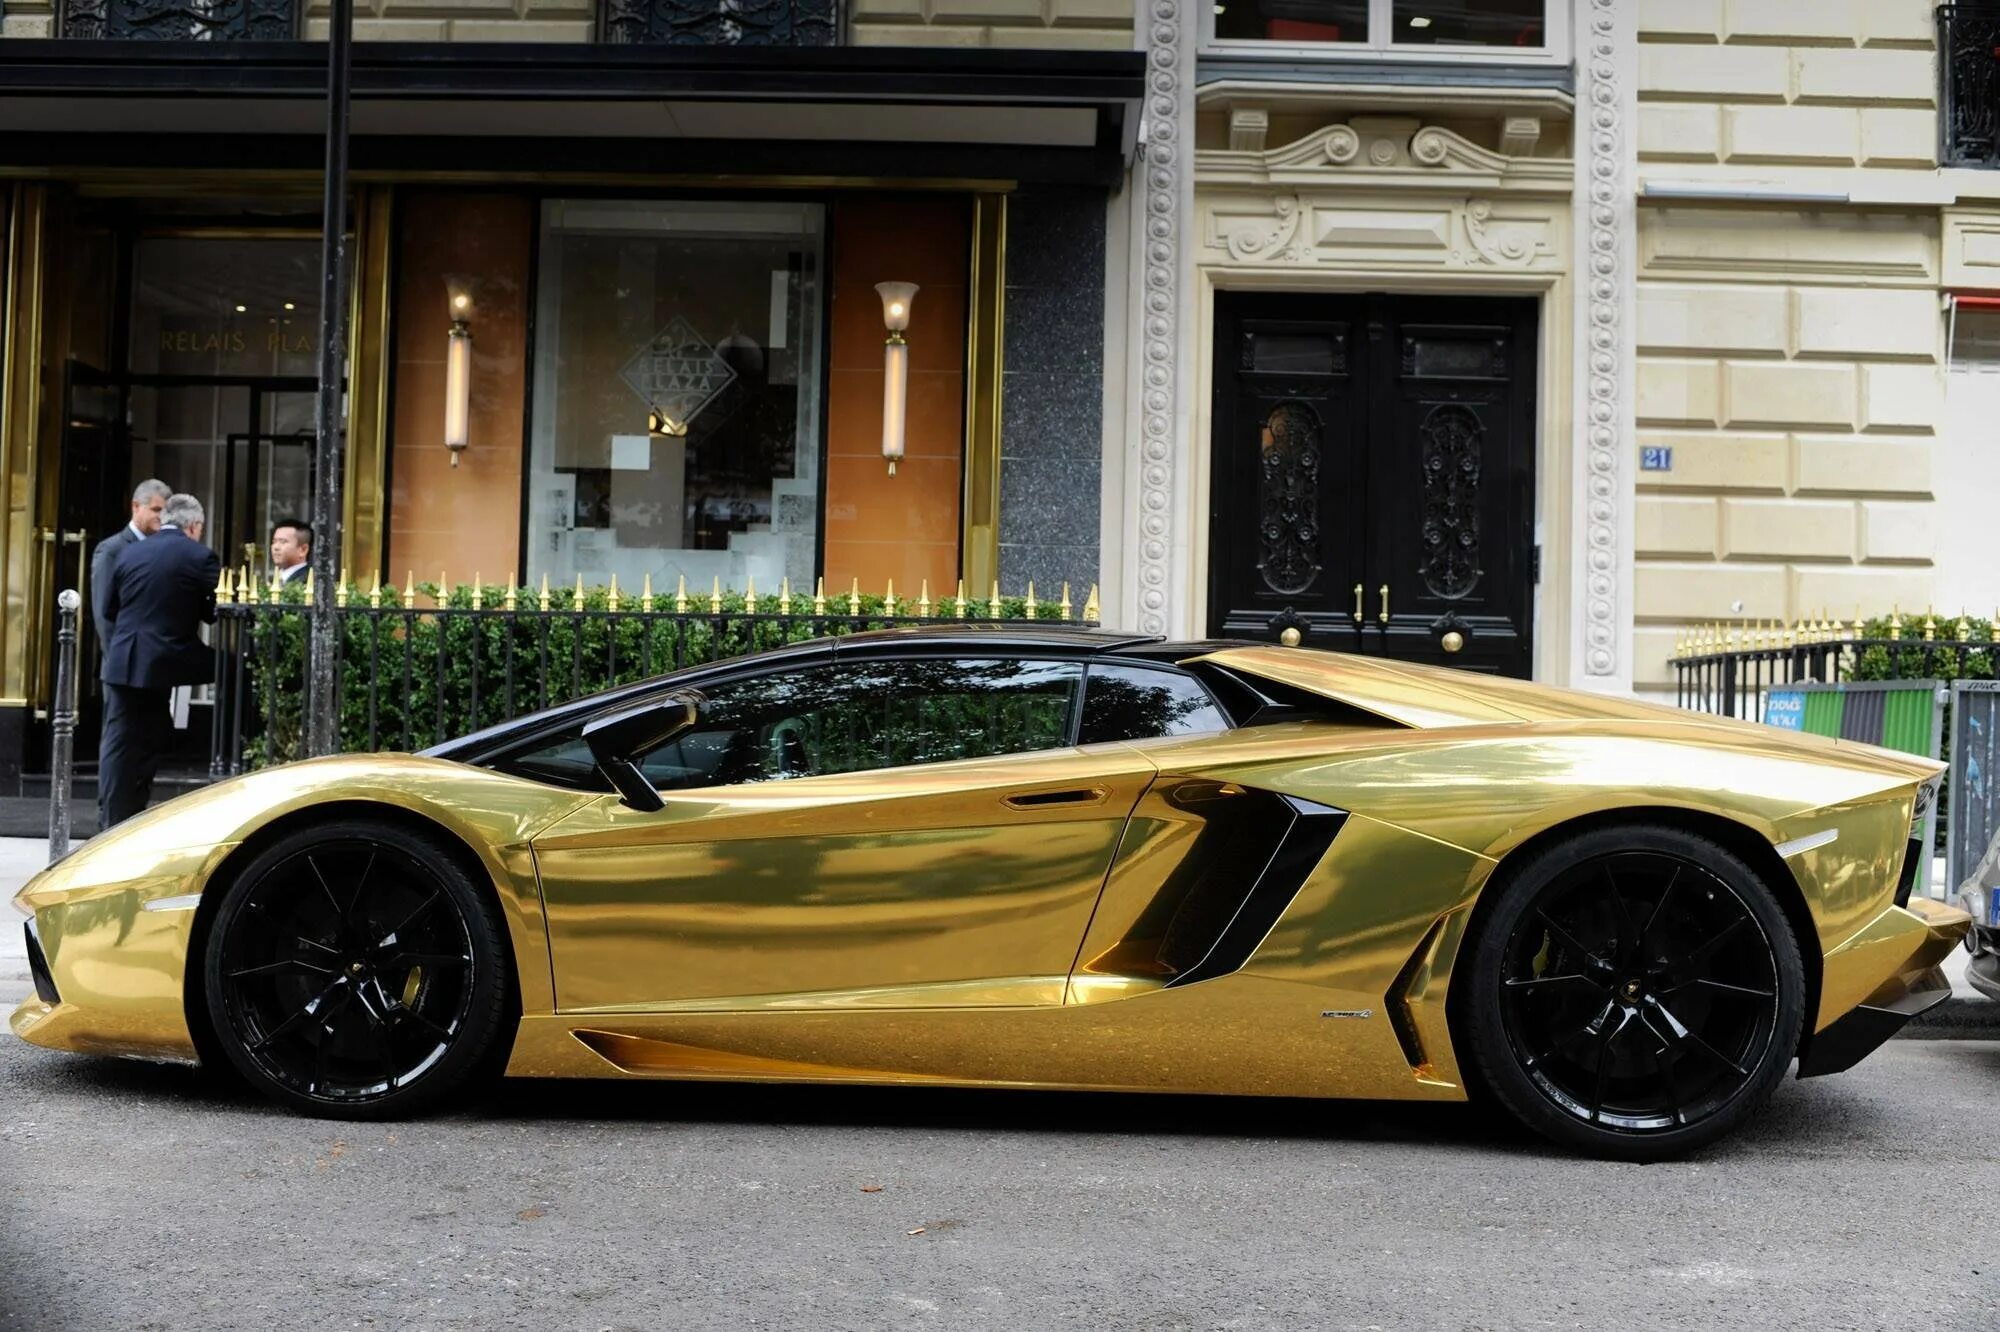 Lamborghini Aventador lp700-4 Золотая. Золотой Lamborghini авентадор. Ламборджини авентадор Золотая Дубай. Ламборгини авентадор шейха Золотая. Expensive gold